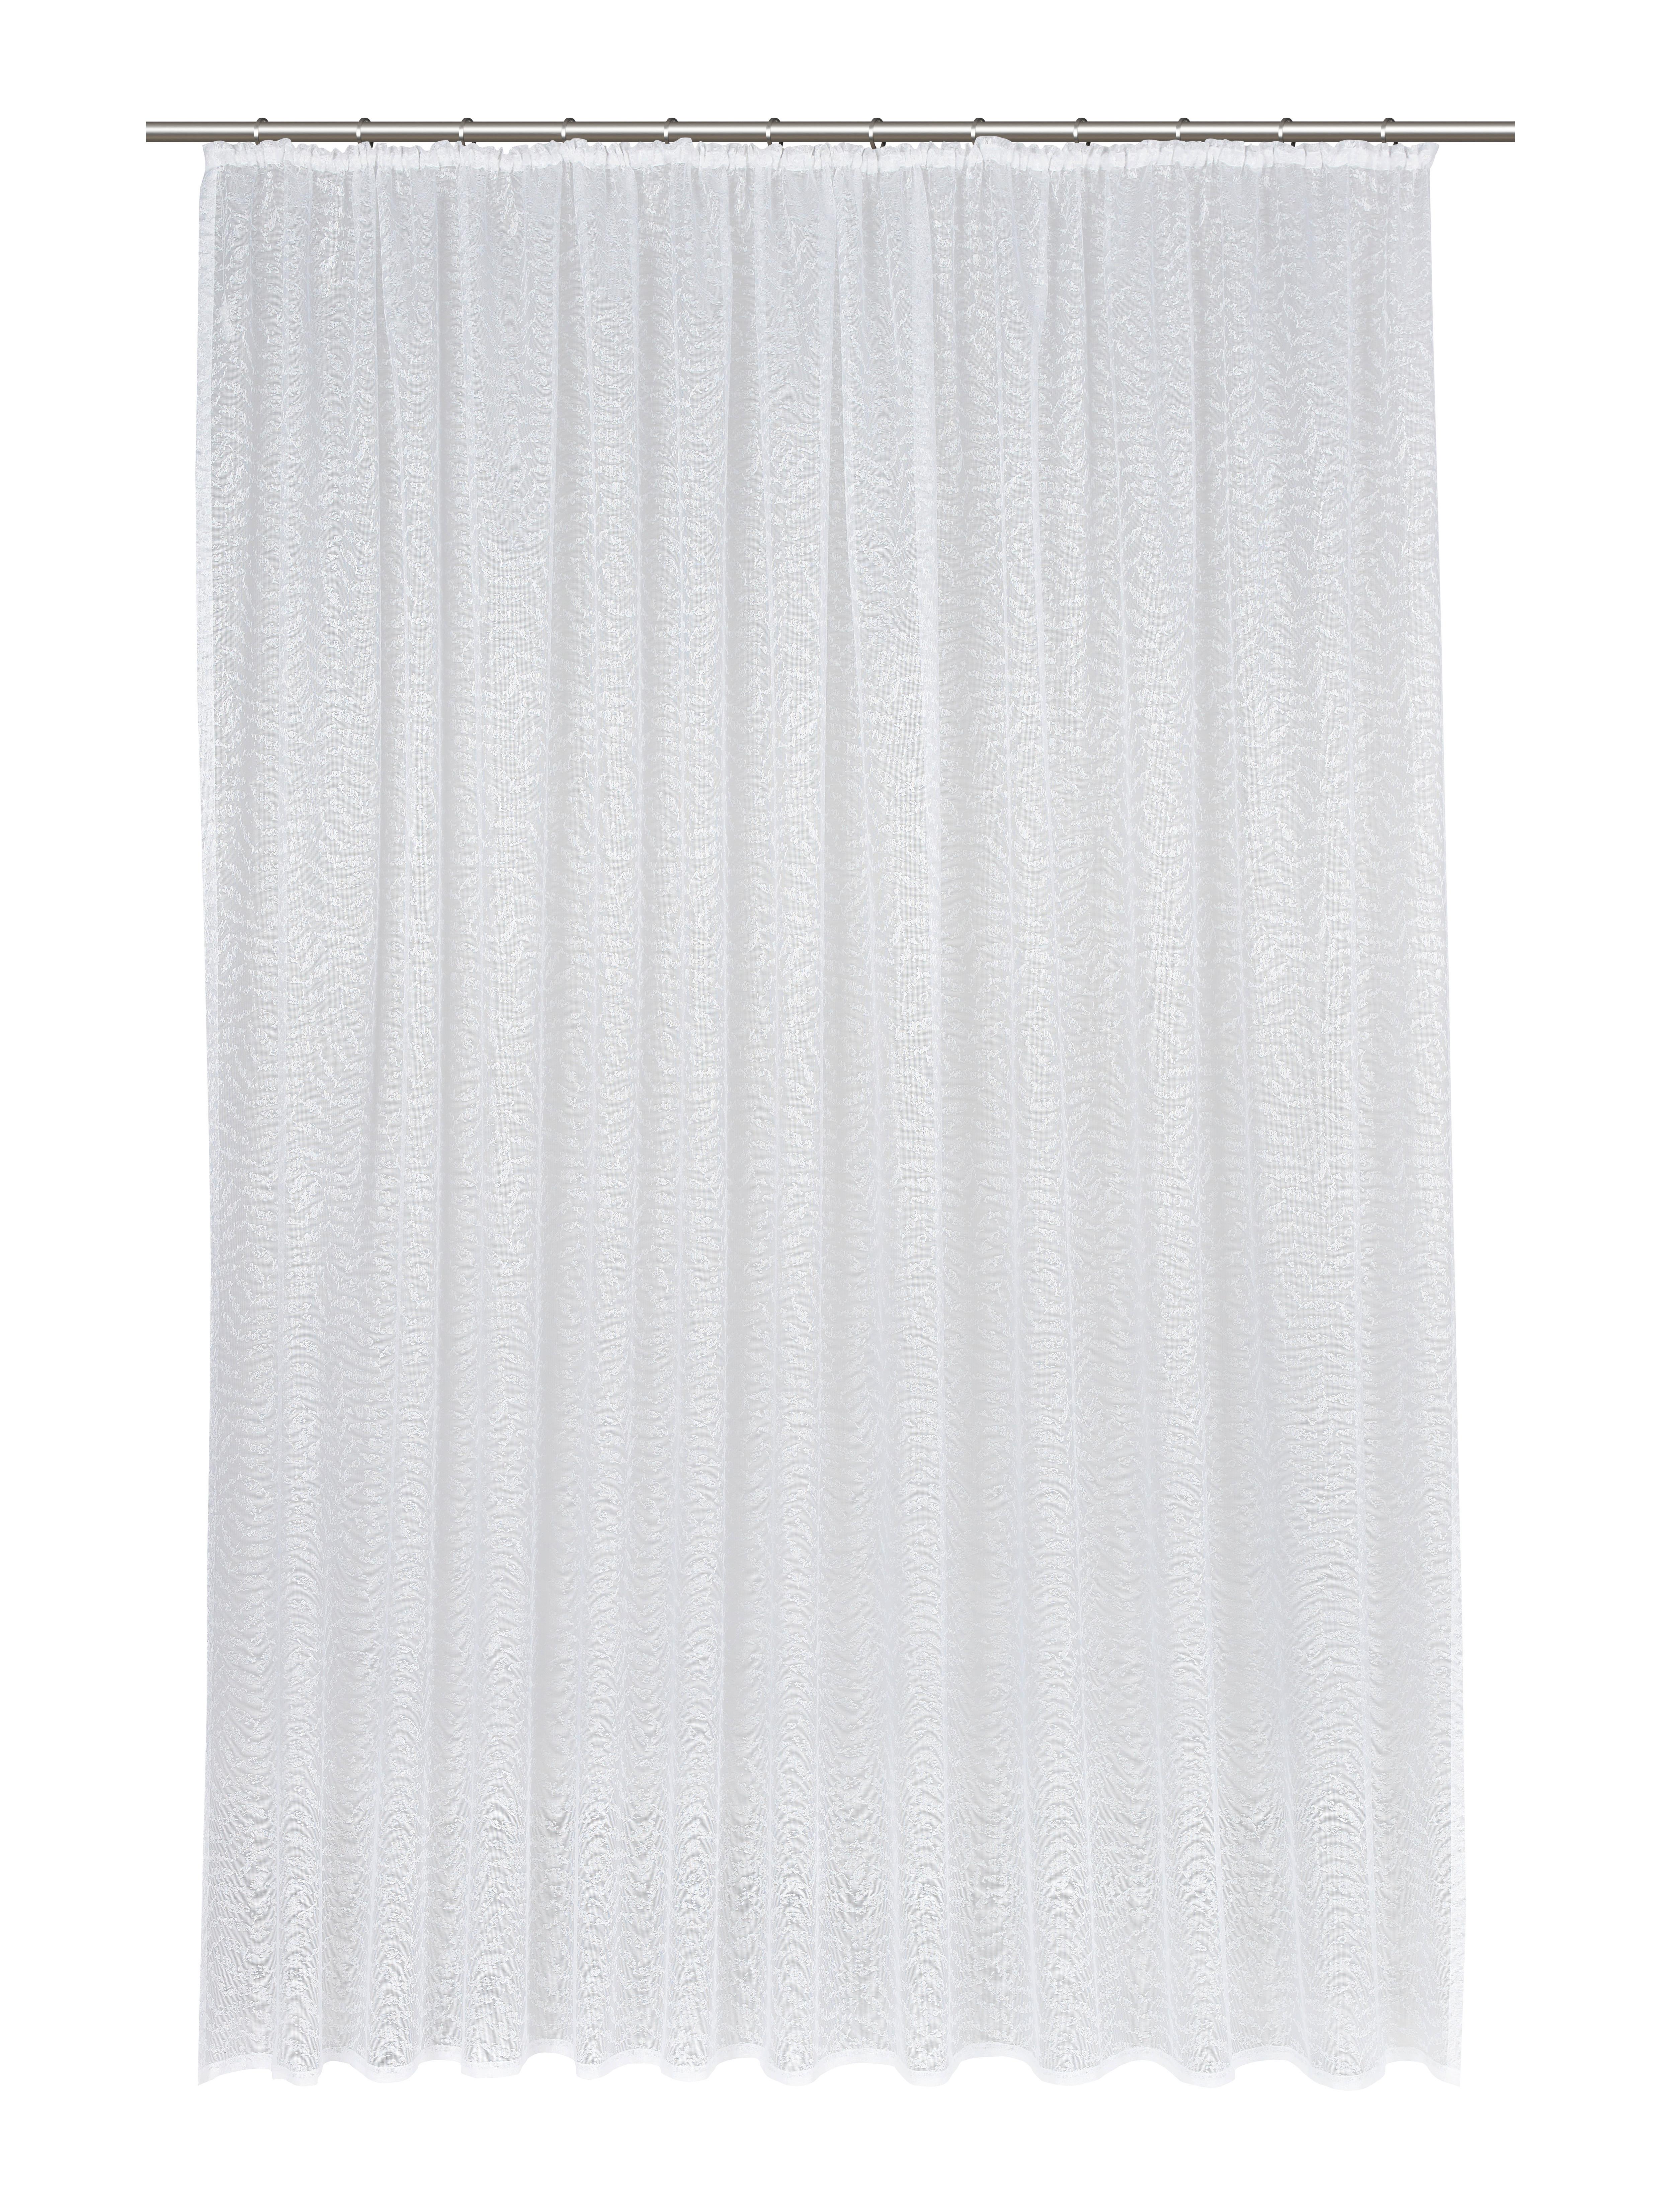 Fertigstore Rita Store 3 ca. 300x245cm - Weiß, KONVENTIONELL, Textil (300/245cm) - Modern Living